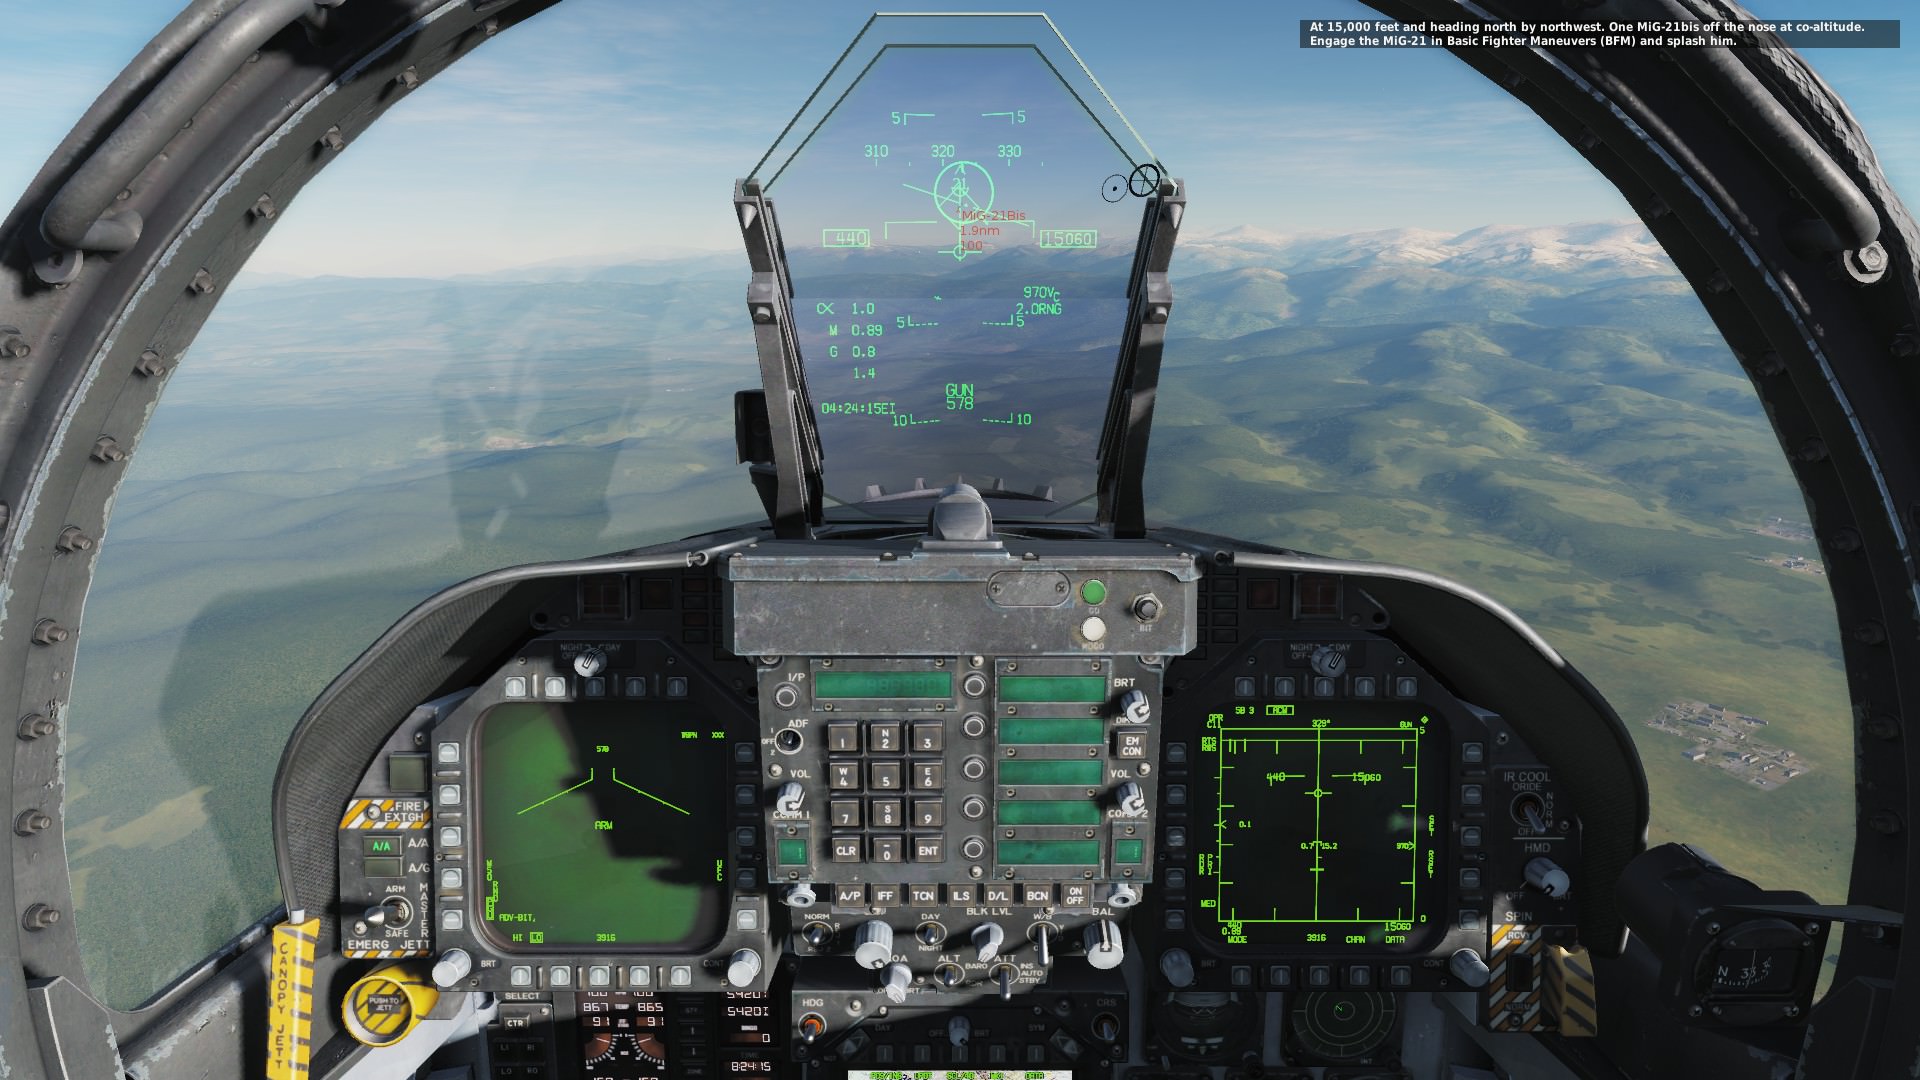 Digital Combat Simulator VR – The REALISM Is INCREDIBLE NOW!